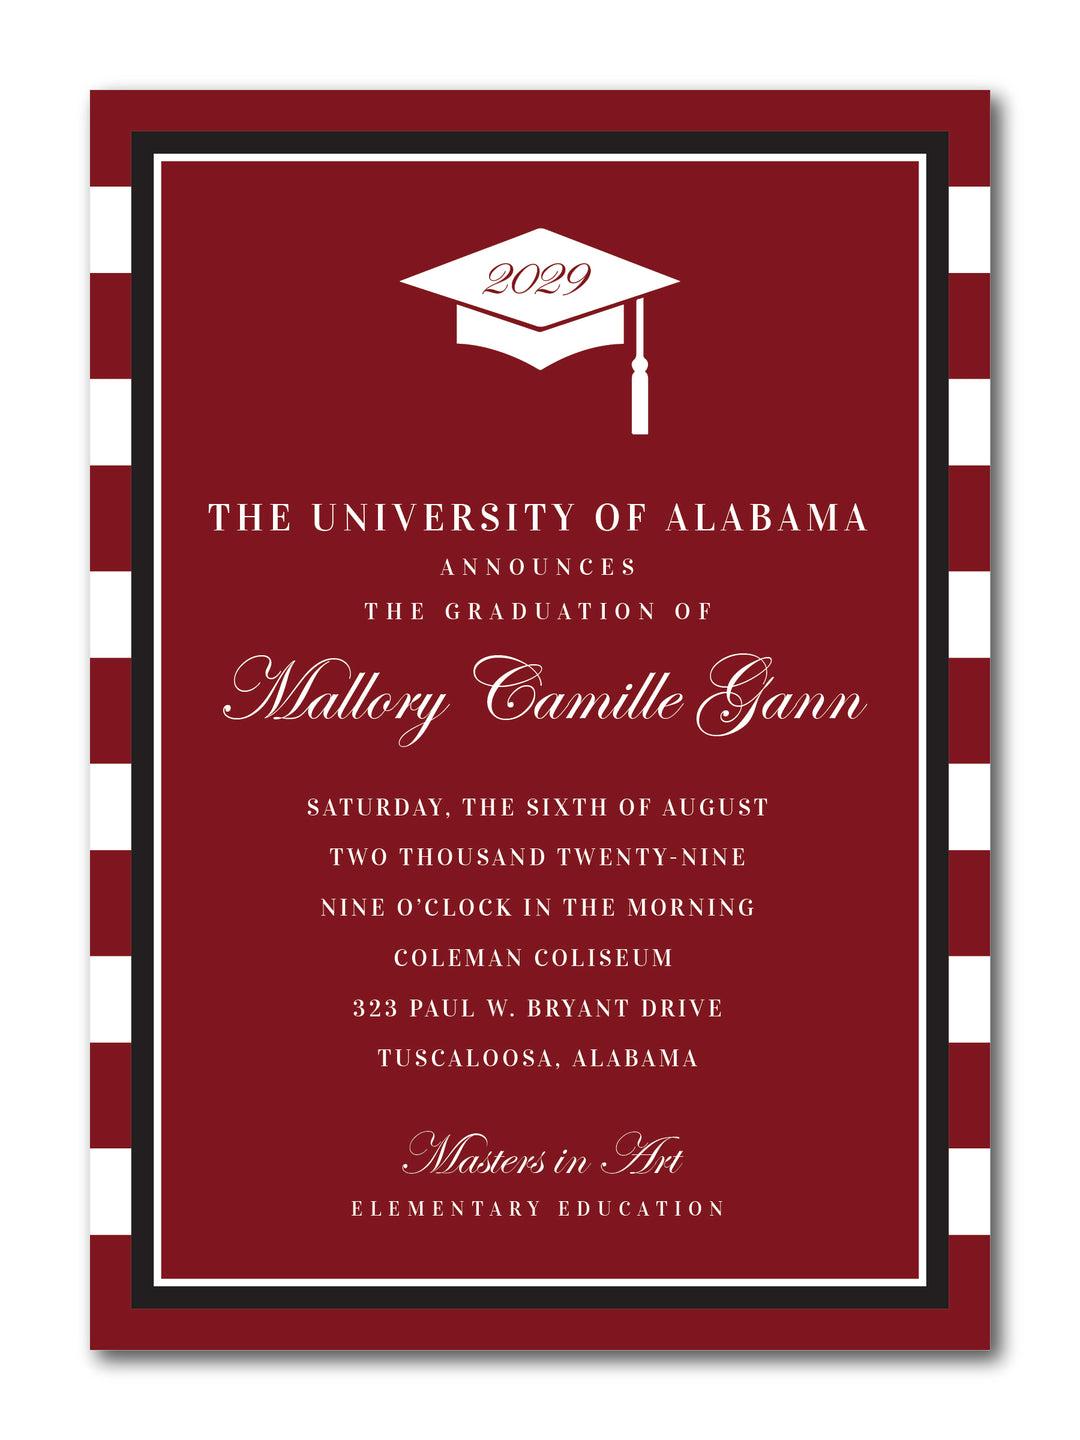 The Mallory Graduation Announcement